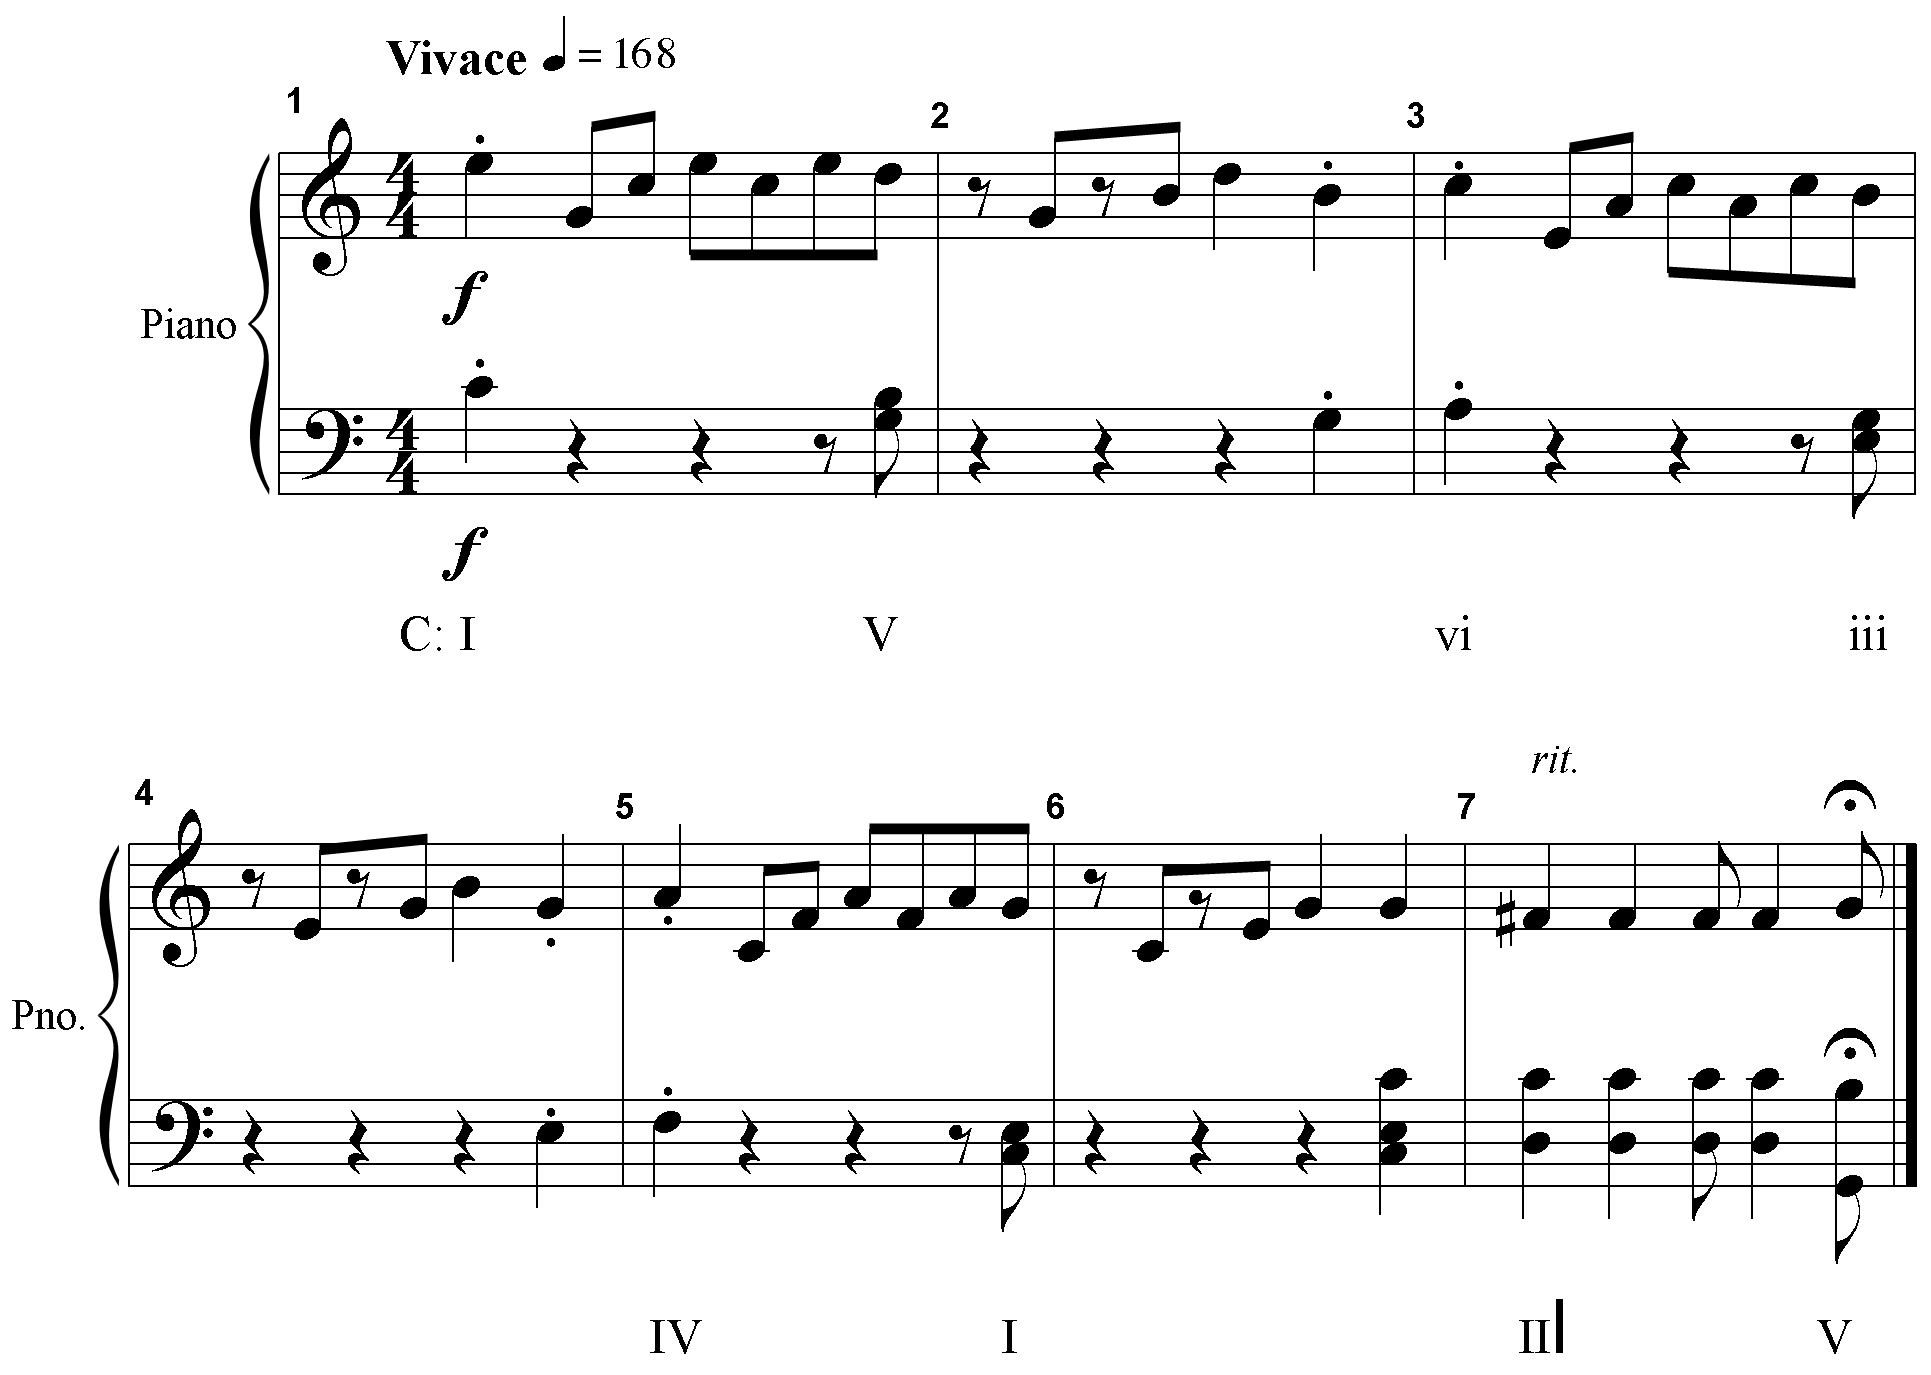 a seven bar tonal-melody ending on the dominant V